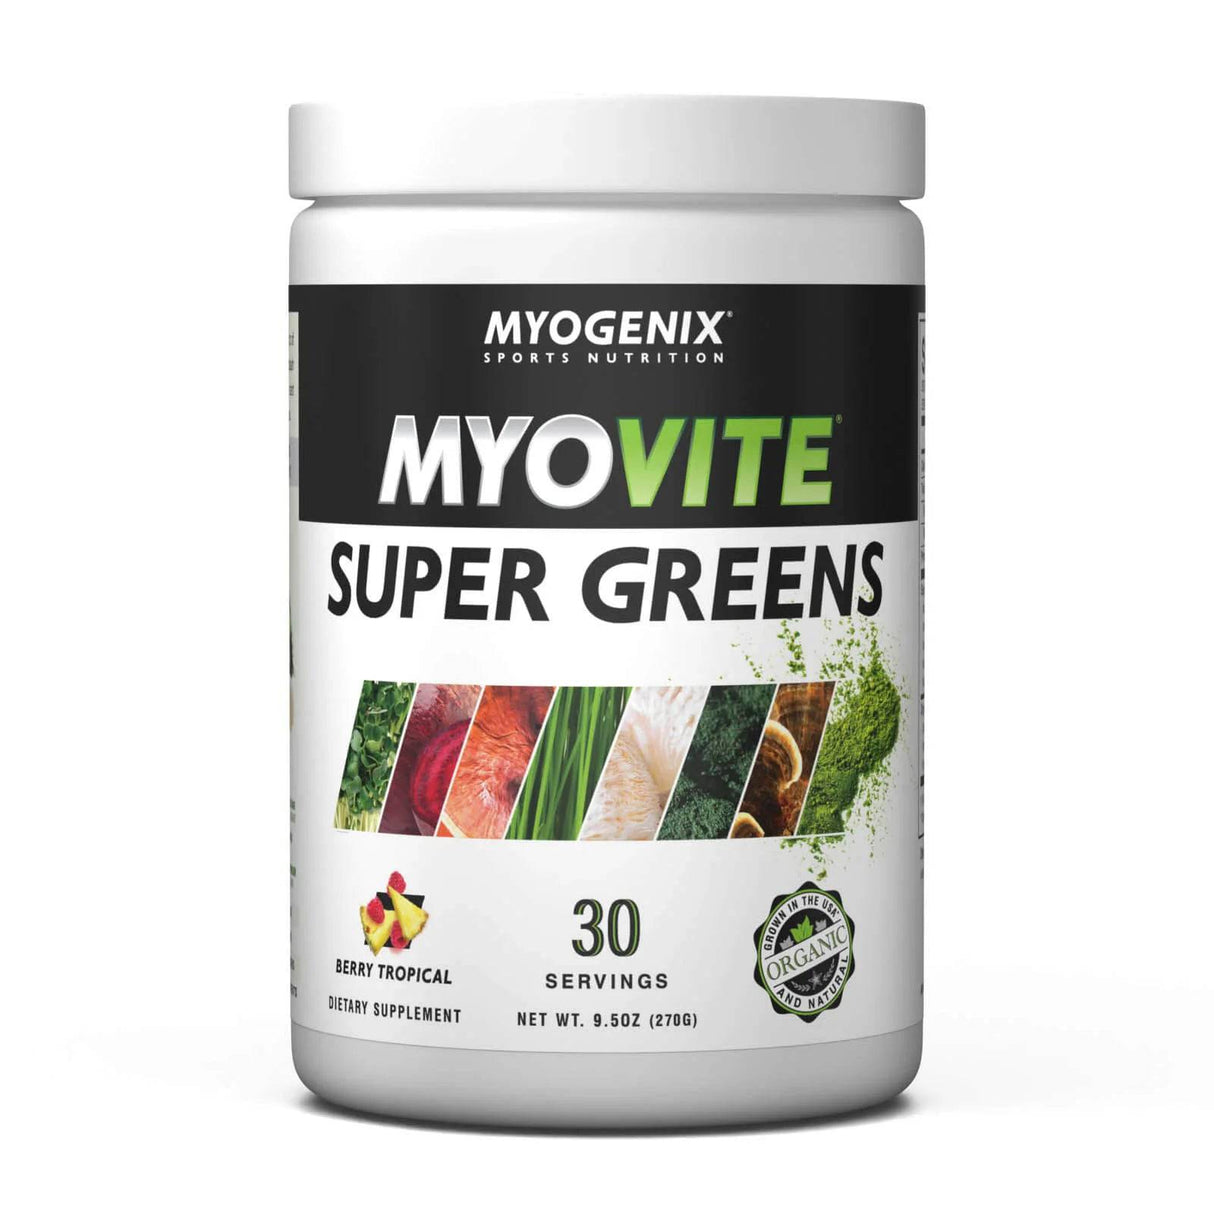 Super Greens - Myogenix - Prime Sports Nutrition